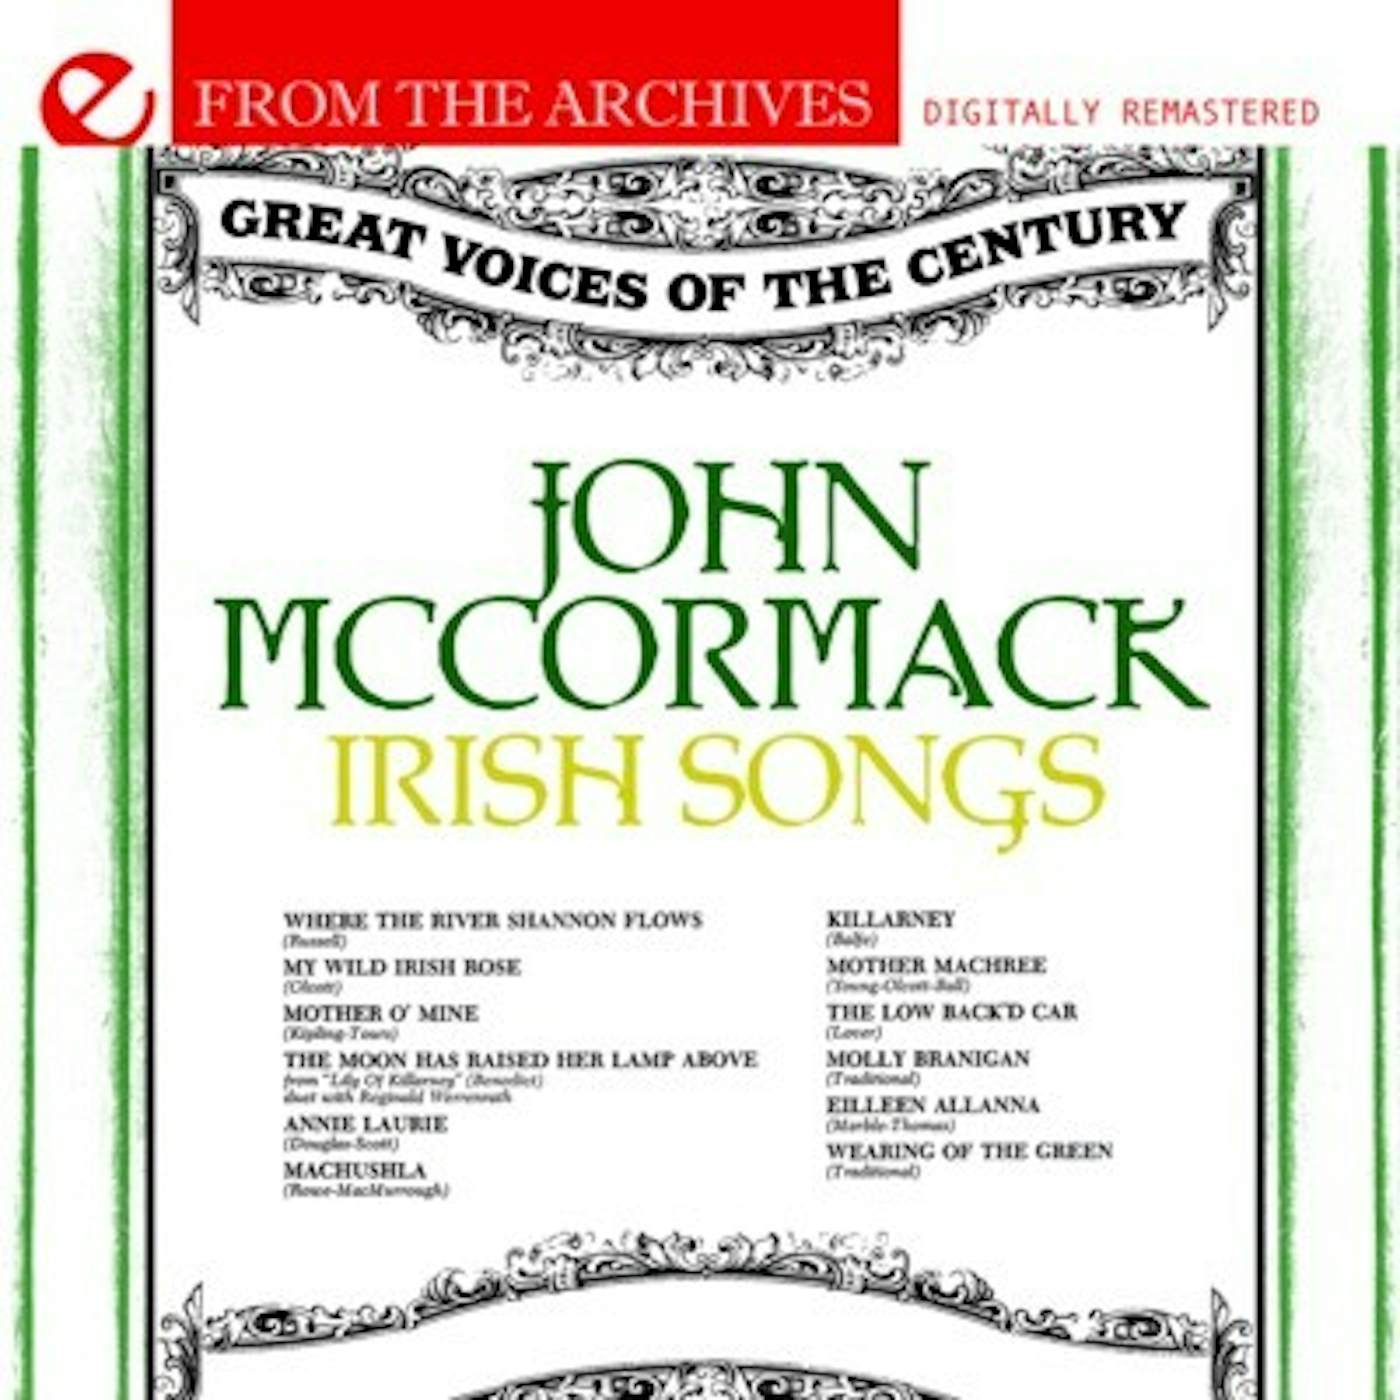 John McCormack IRISH SONGS: FROM THE ARCHIVES CD